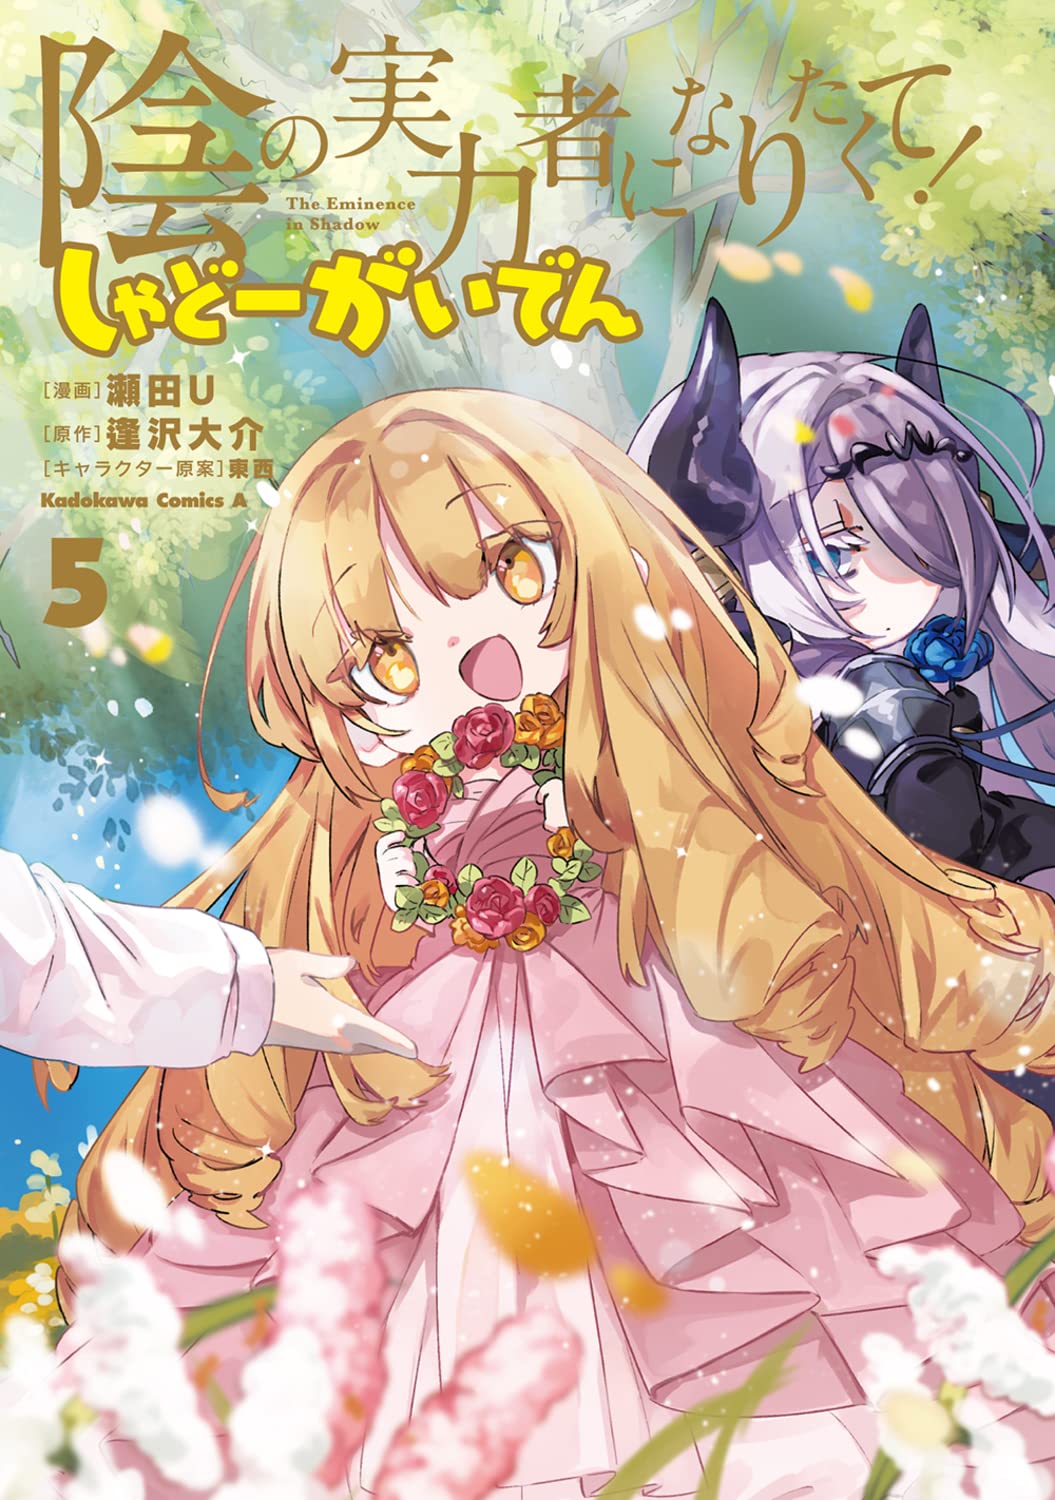 The Eminence in Shadow vol.1-11 Japanese Comic Book Manga Anime Set